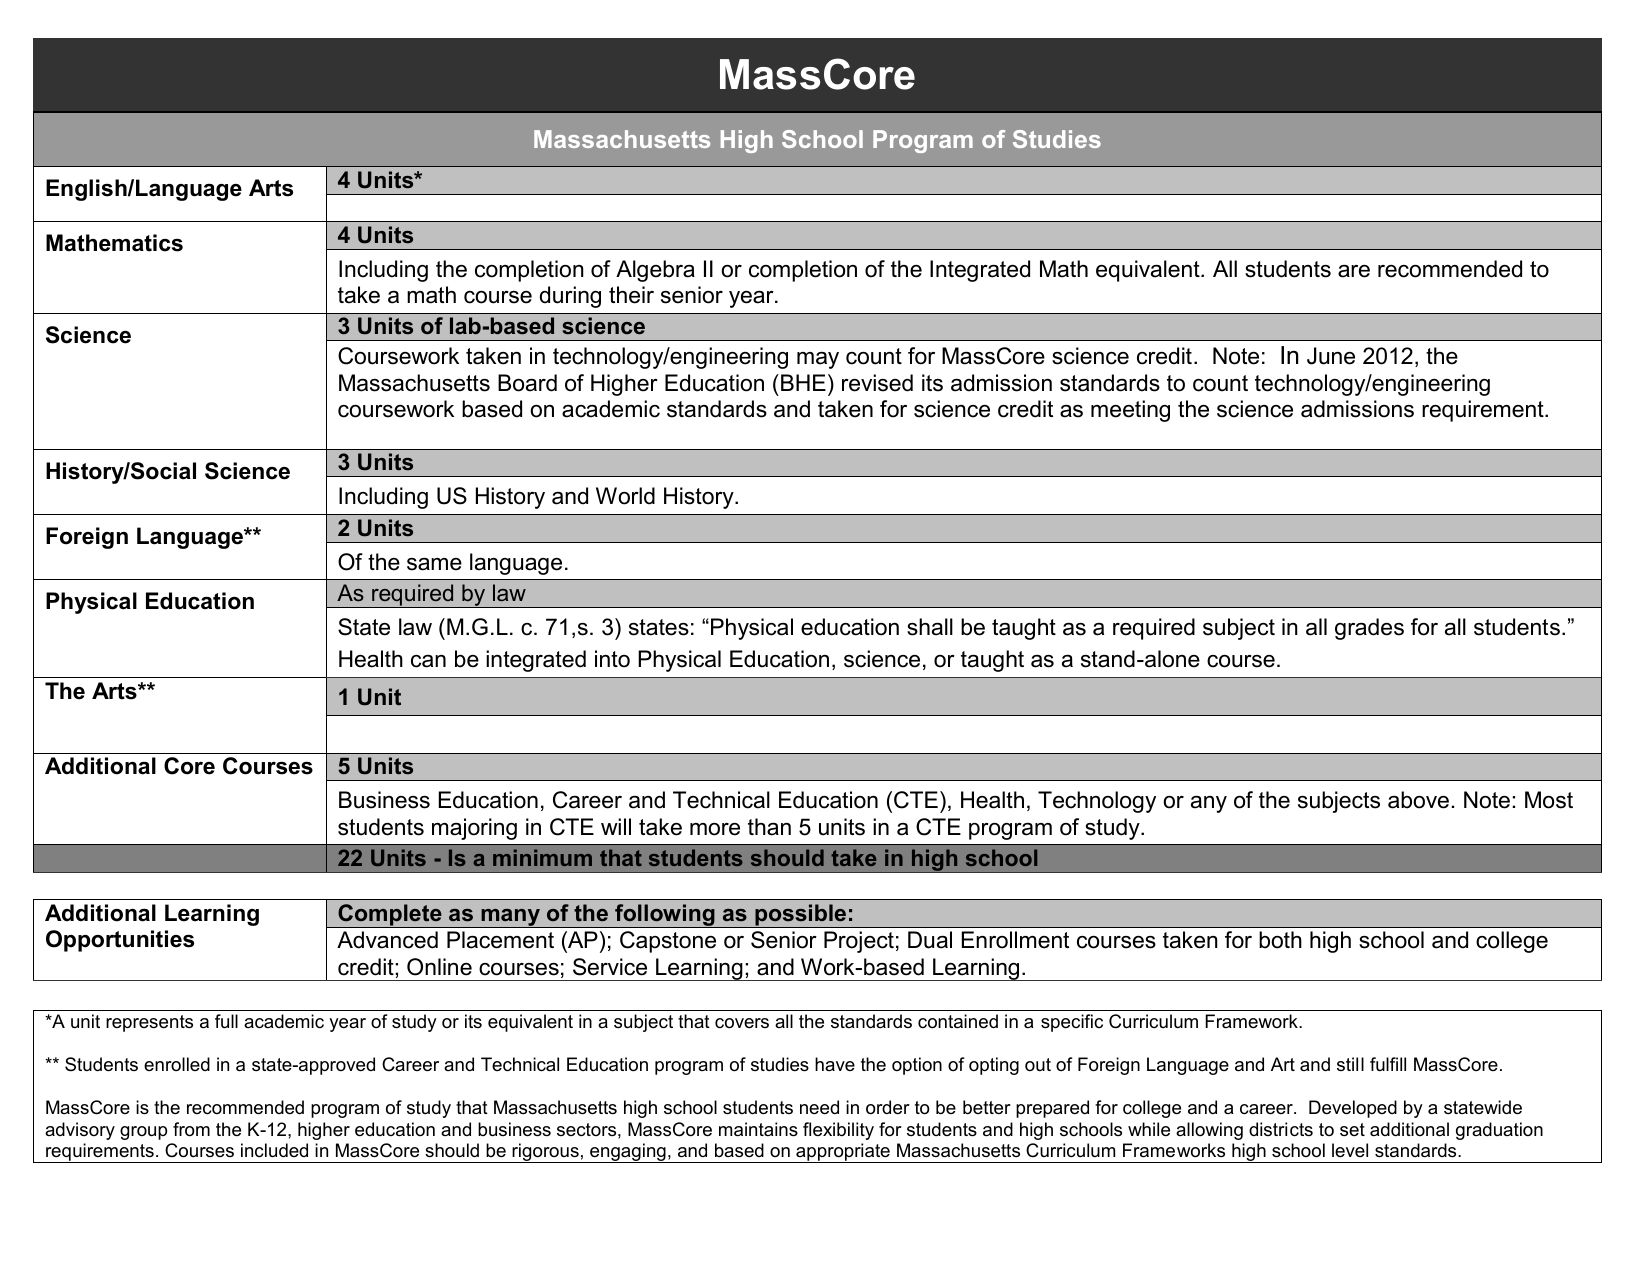 Masscore College Readiness High School Curriculum